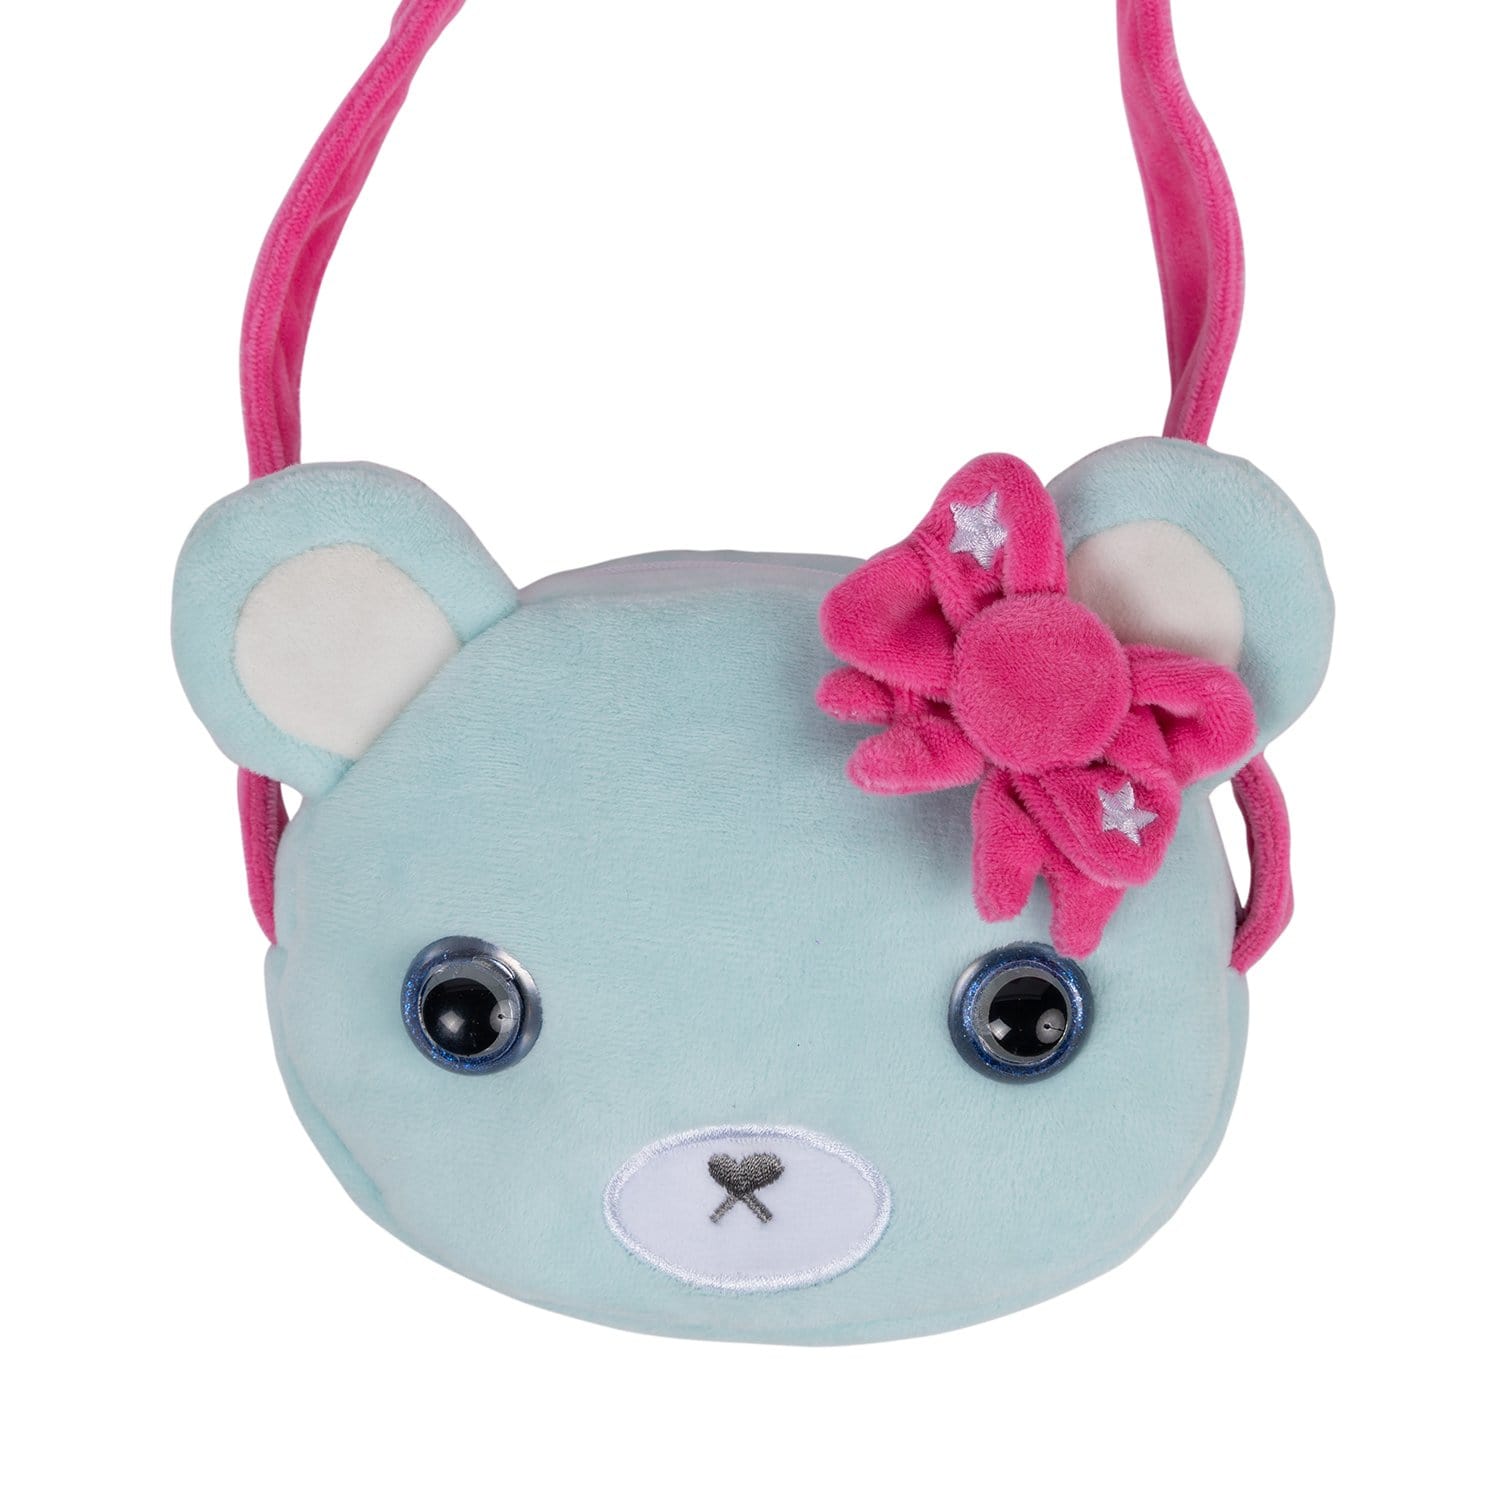 Princess PU Shell Mini Small Handbags For Women Cute Christmas Gift For  Little Girls From Wangfa88, $11.99 | DHgate.Com